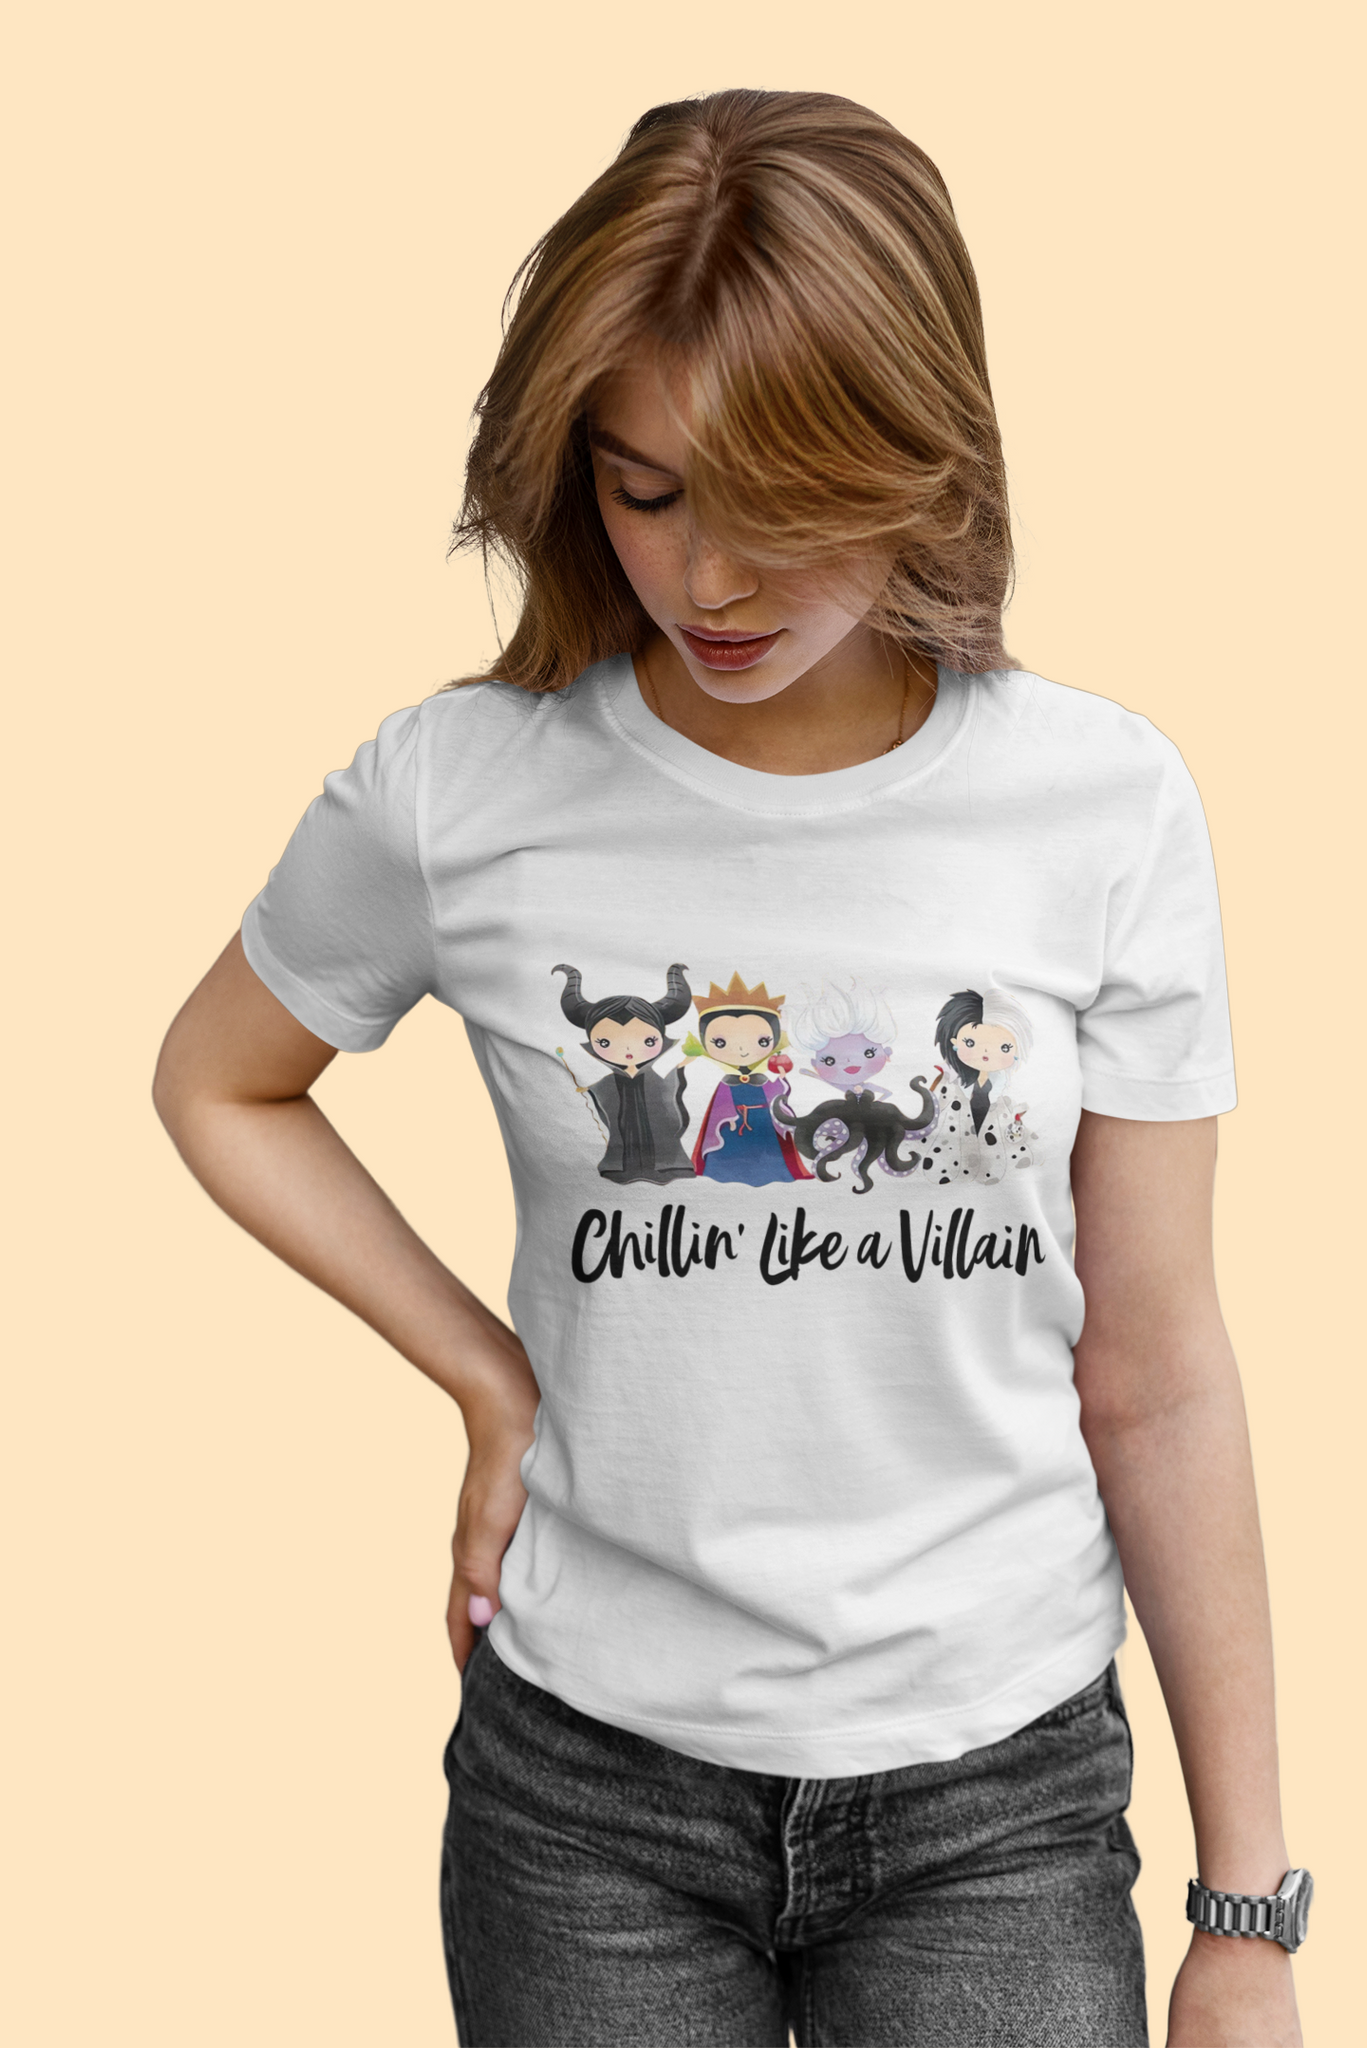 Disney Maleficent T Shirt, Disney Villains T Shirt, The Evil Queen Ursula Maleficent Cruella De Vil Tshirt, Chilling Like A Villain Shirt